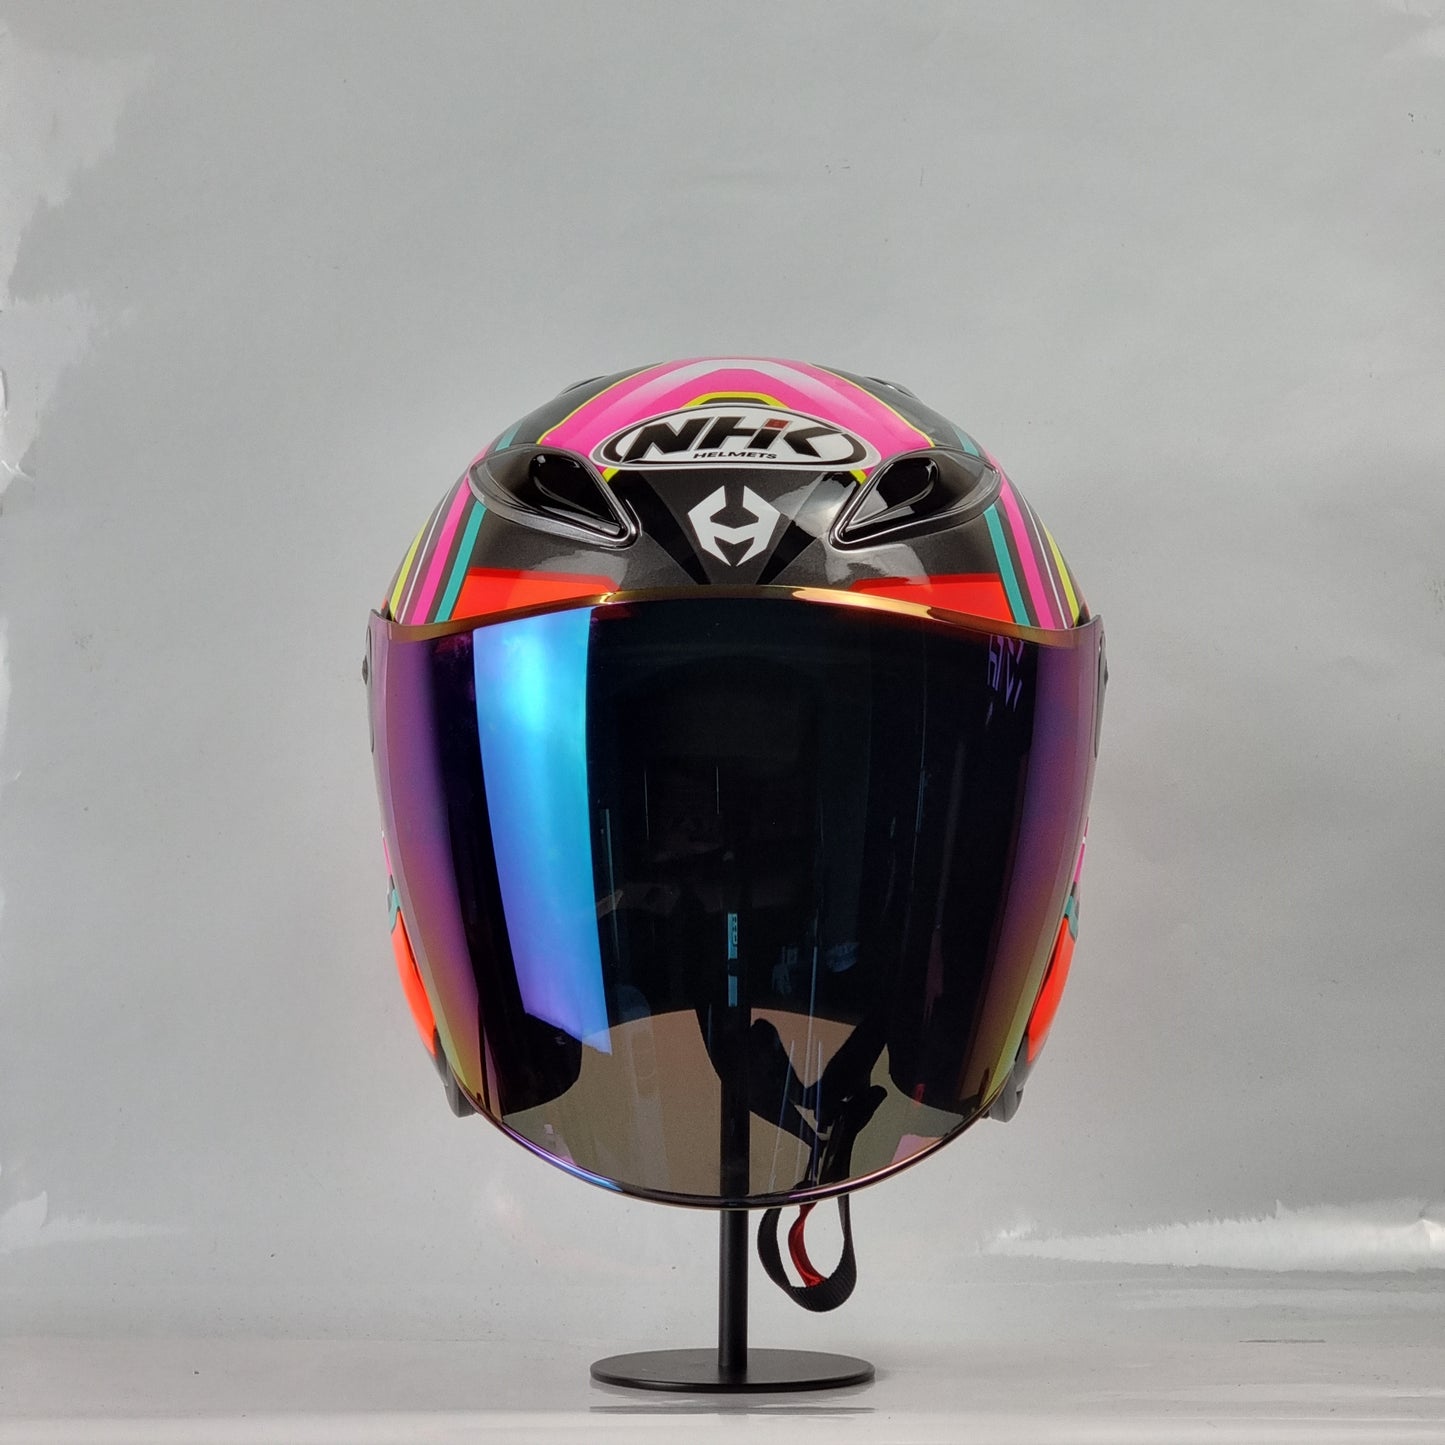 NHK Helmet R6 v2 Xion (Black/Orange Glossy)